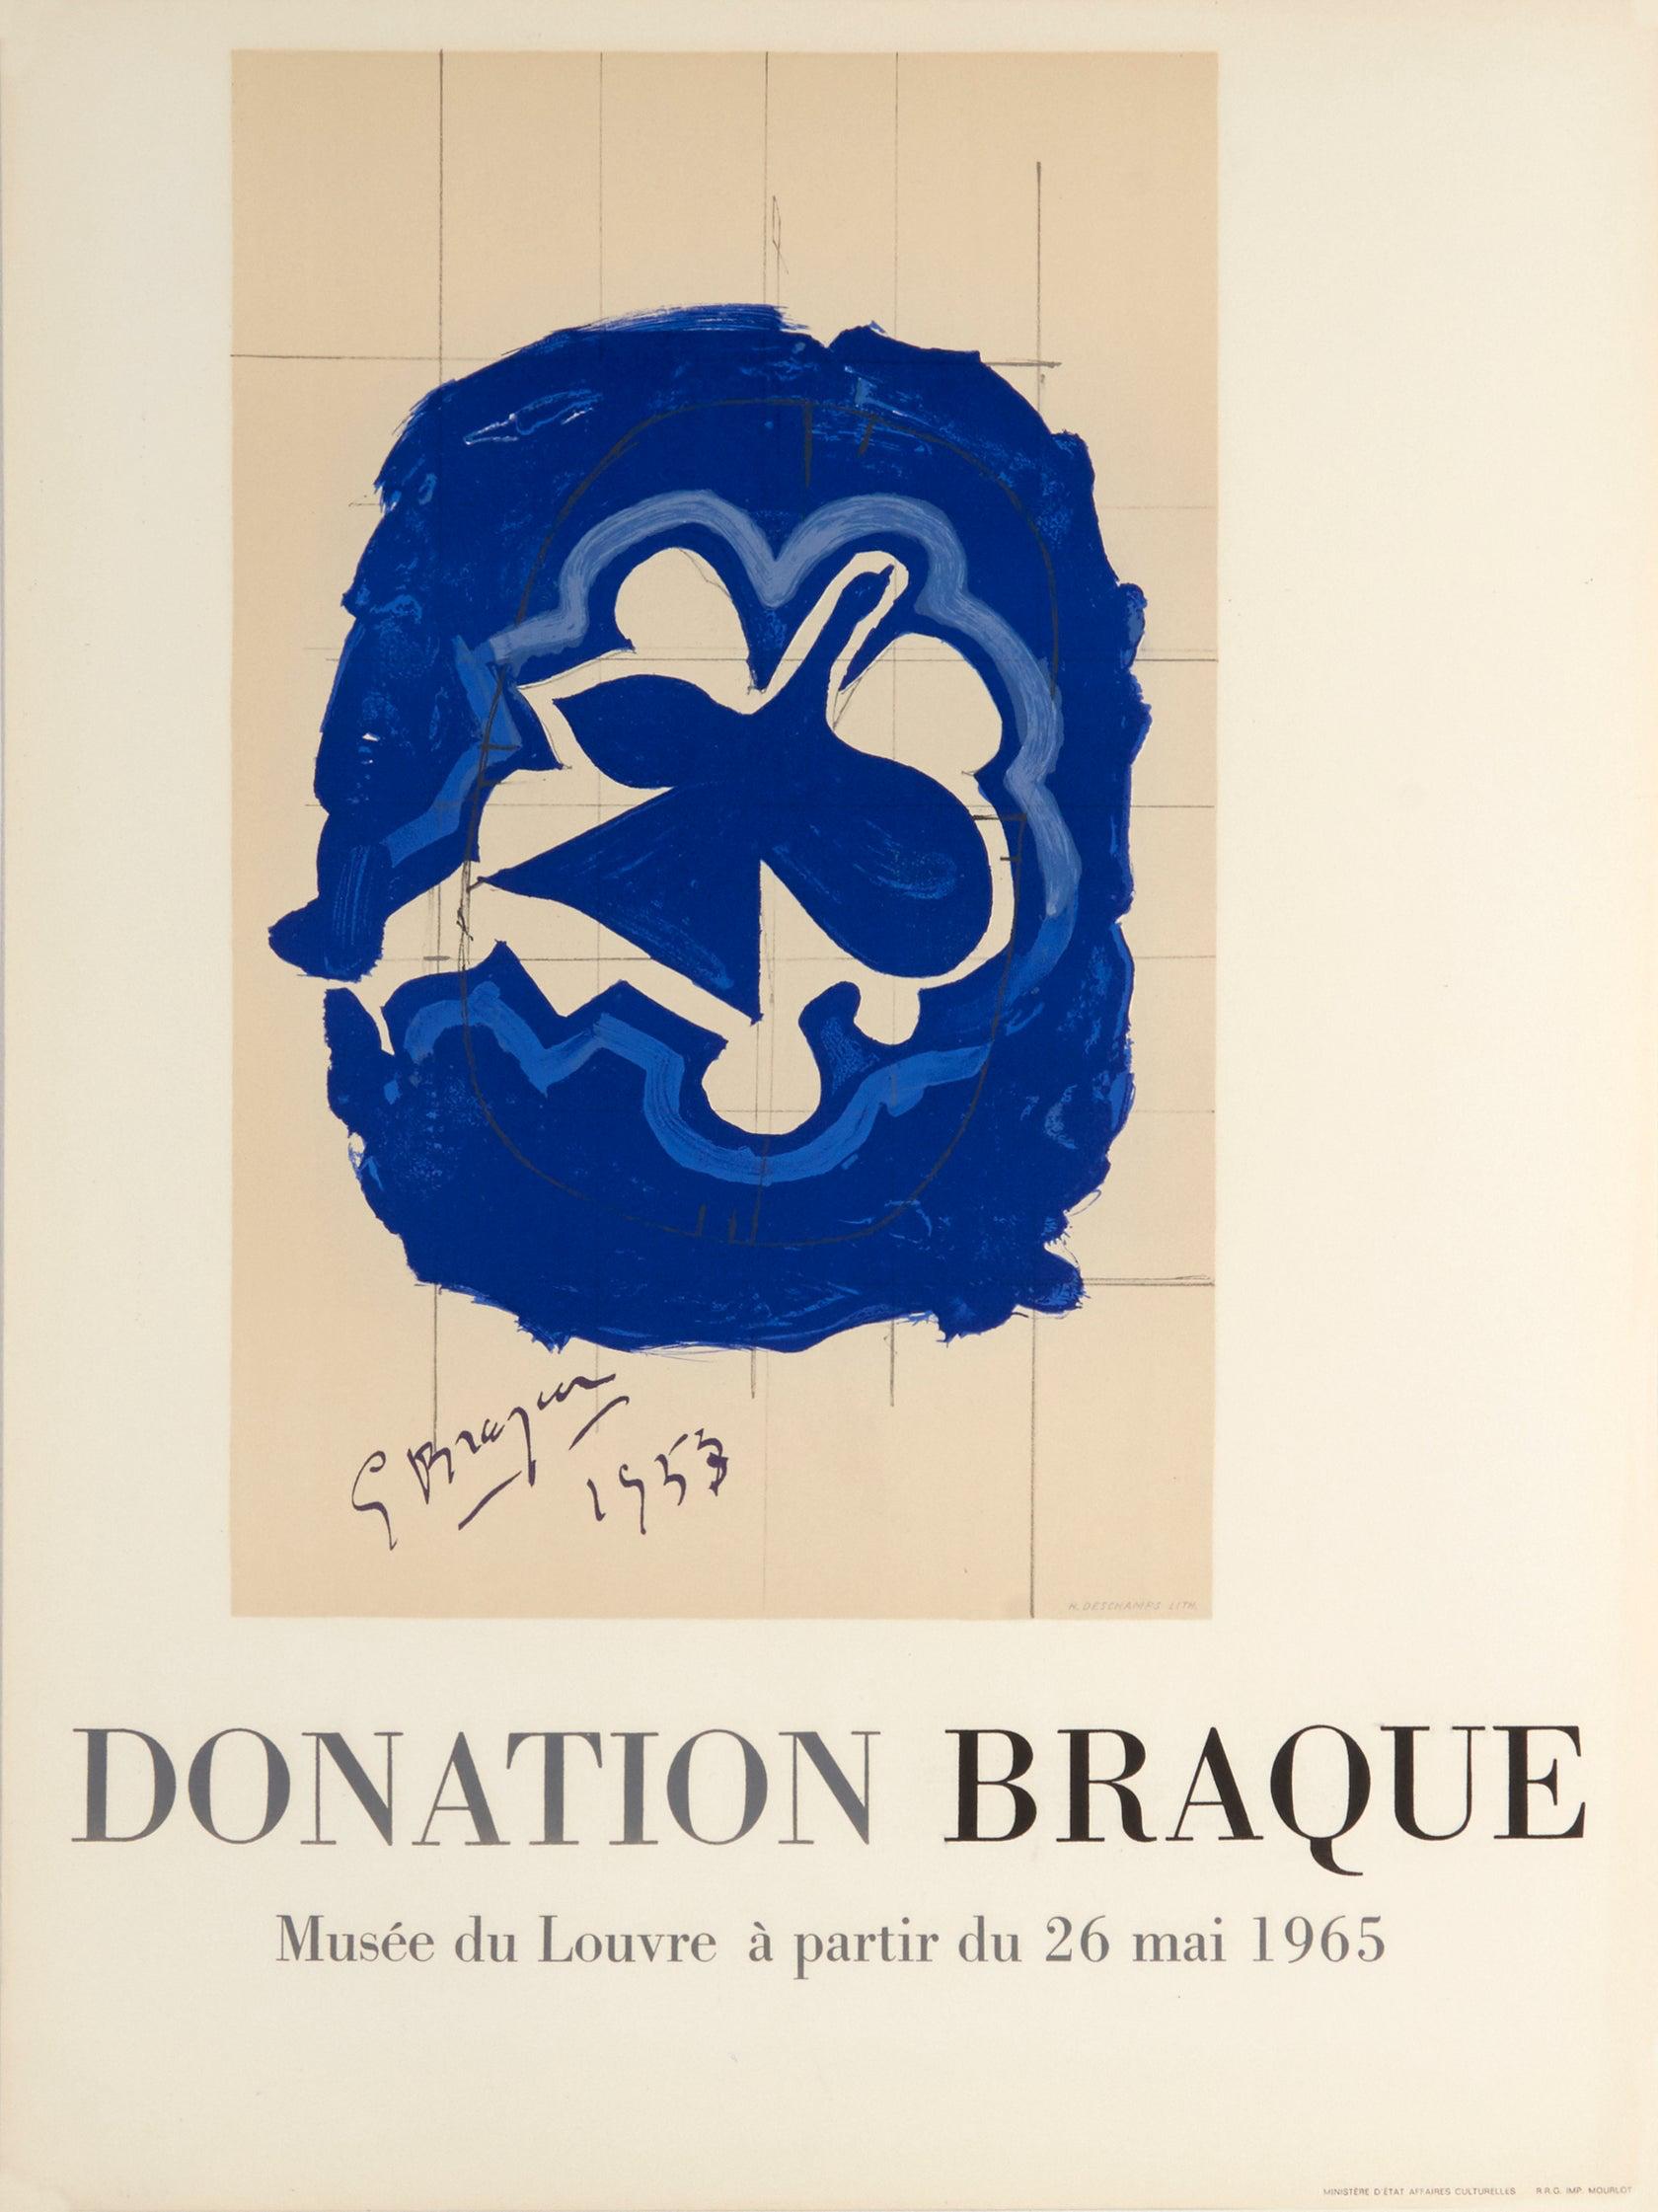 Donation Braque - Le Louvre (After) Georges Braque, 1965 - Print by (after) Georges Braque